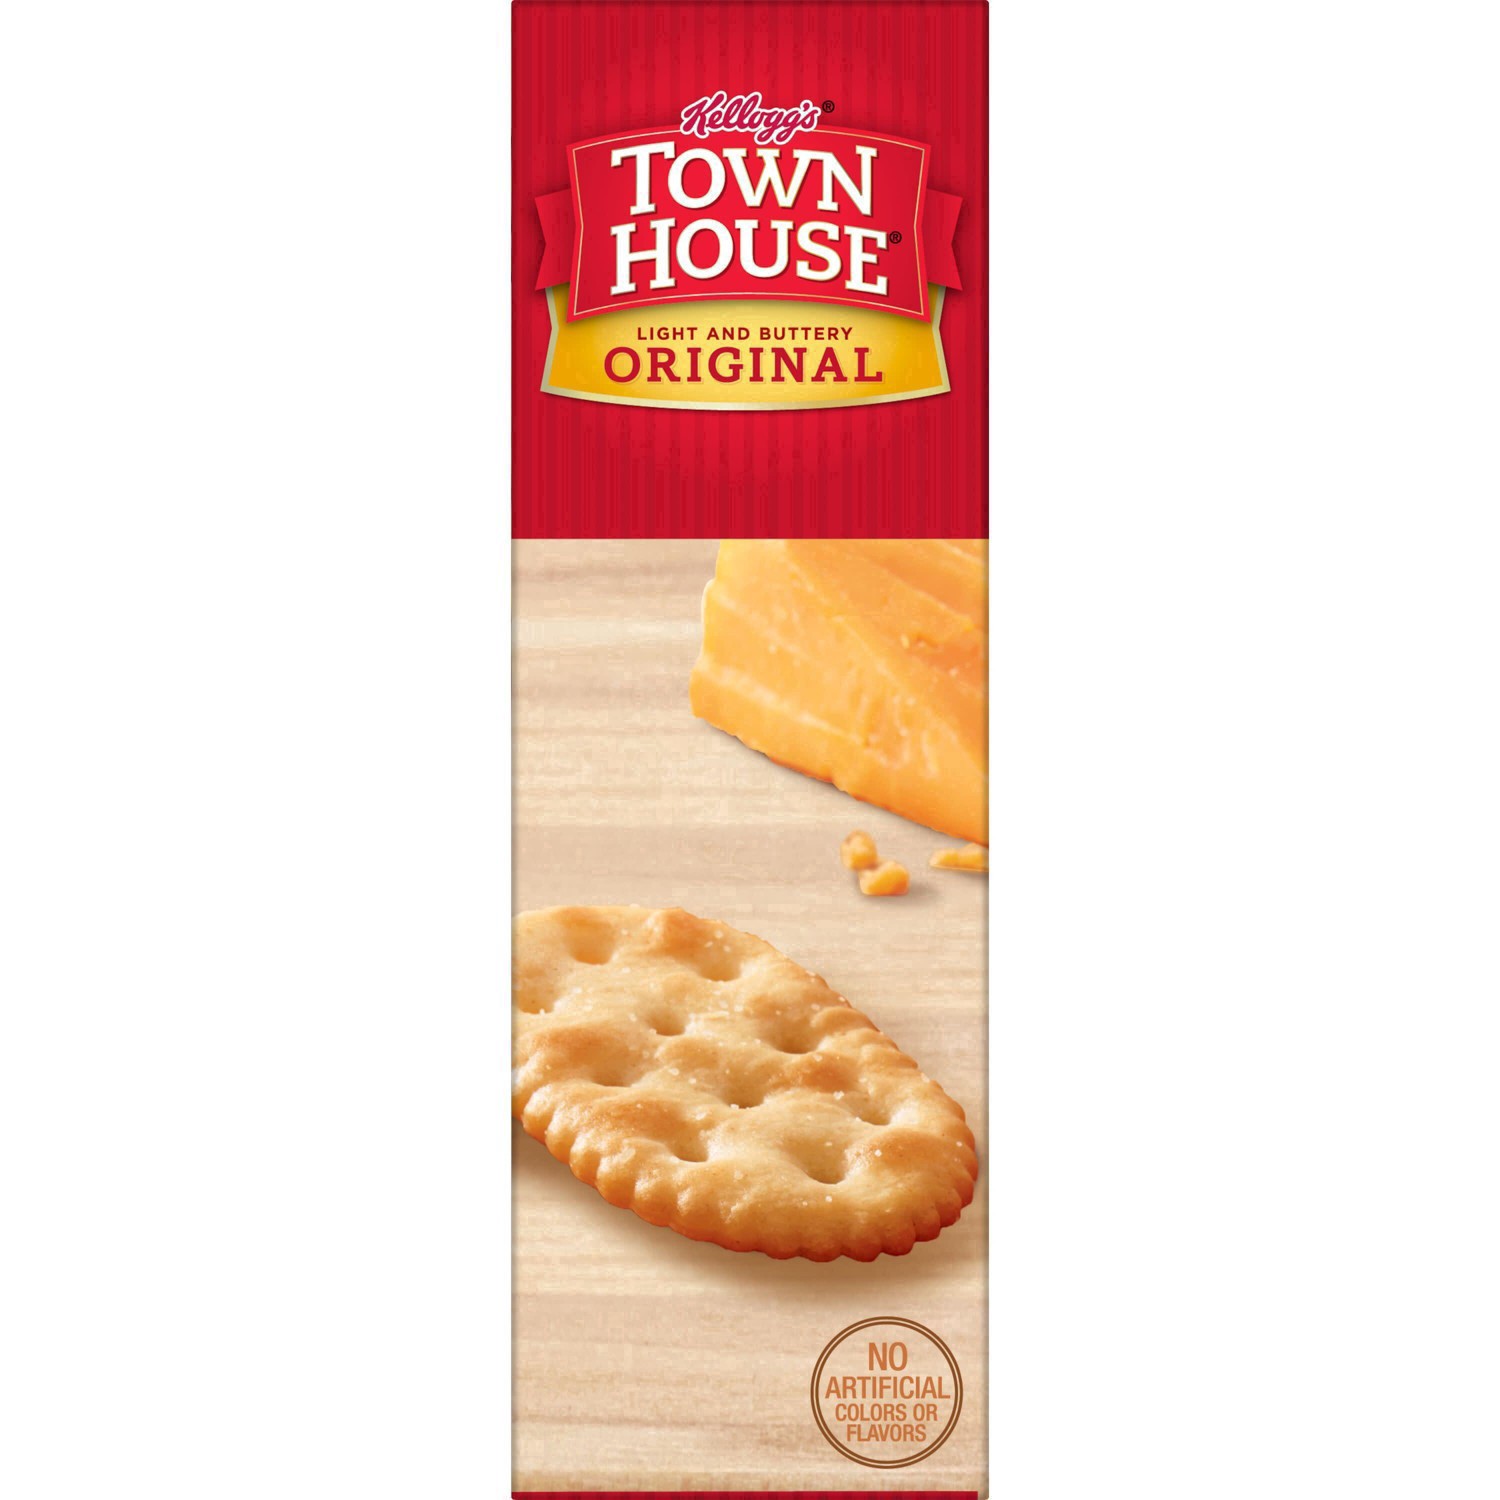 slide 52 of 101, Town House Kellogg's Town House Original Snack Crackers - 13.8oz, 13.8 oz